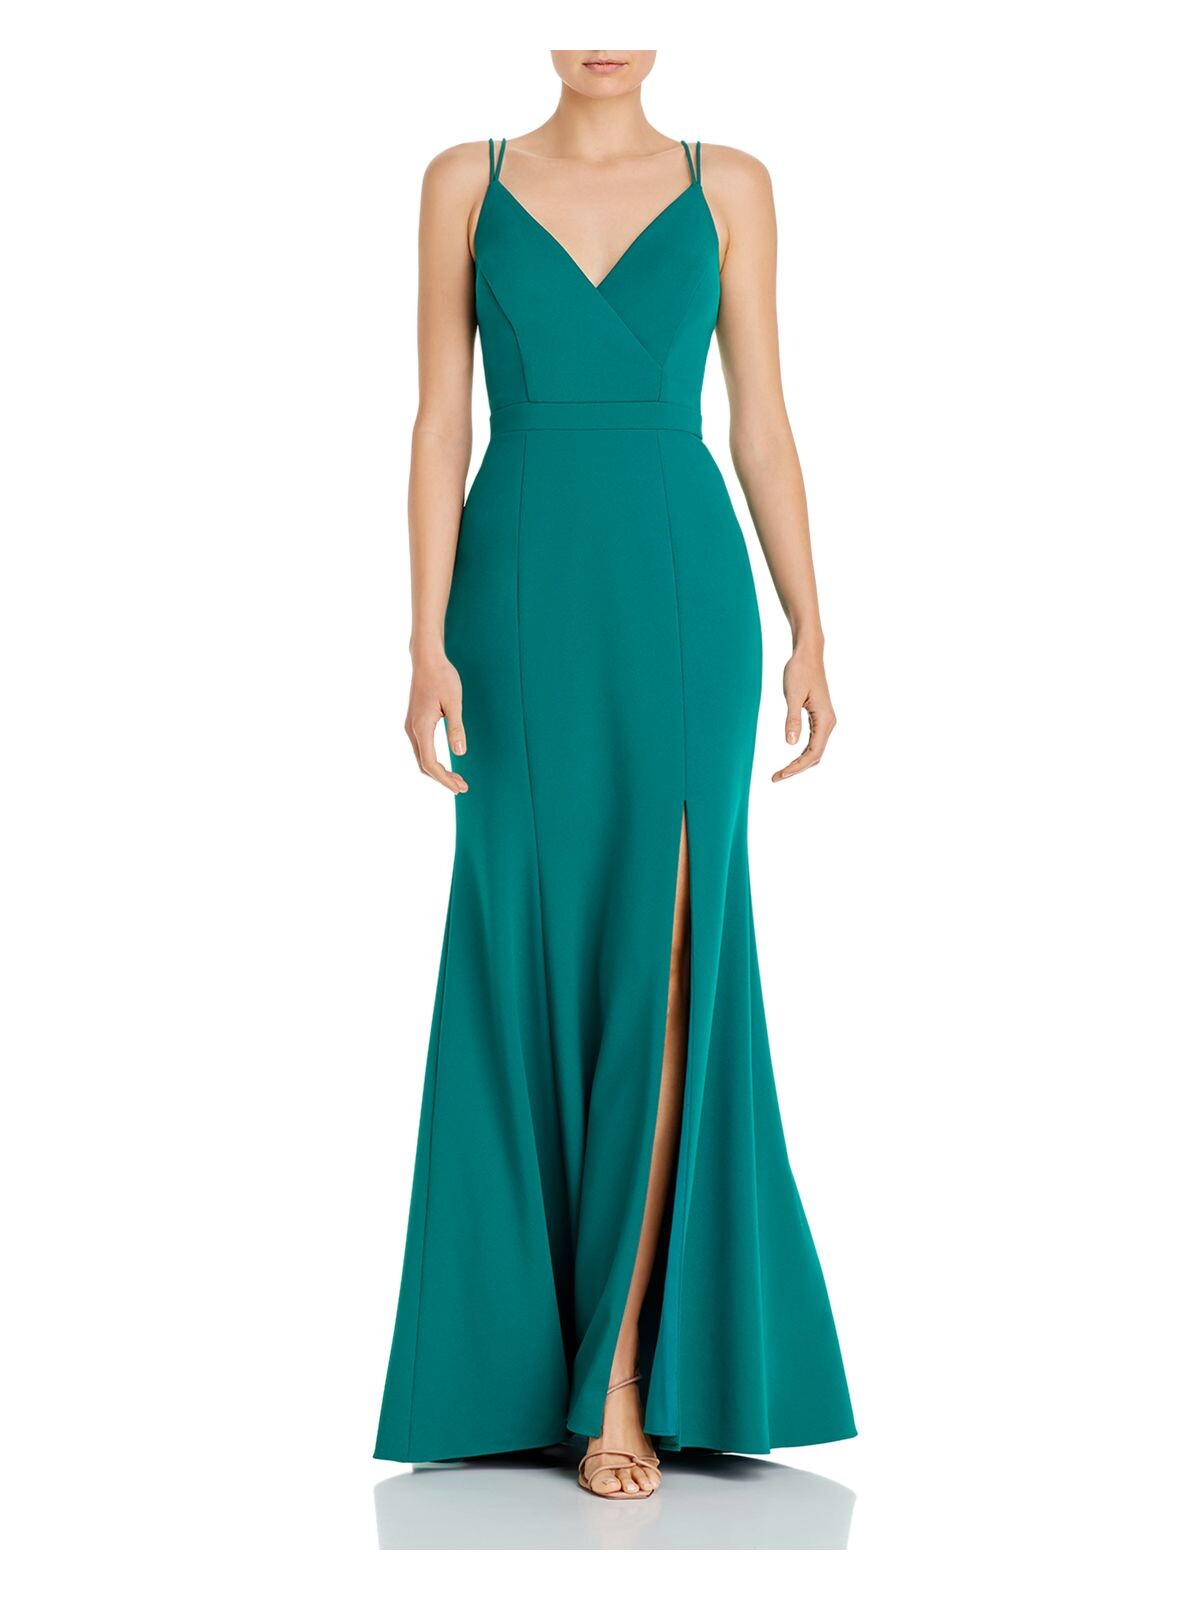 AQUA FORMAL Womens Green Zippered Slitted Spaghetti Strap Surplice Neckline Full-Length Evening Gown Dress 6